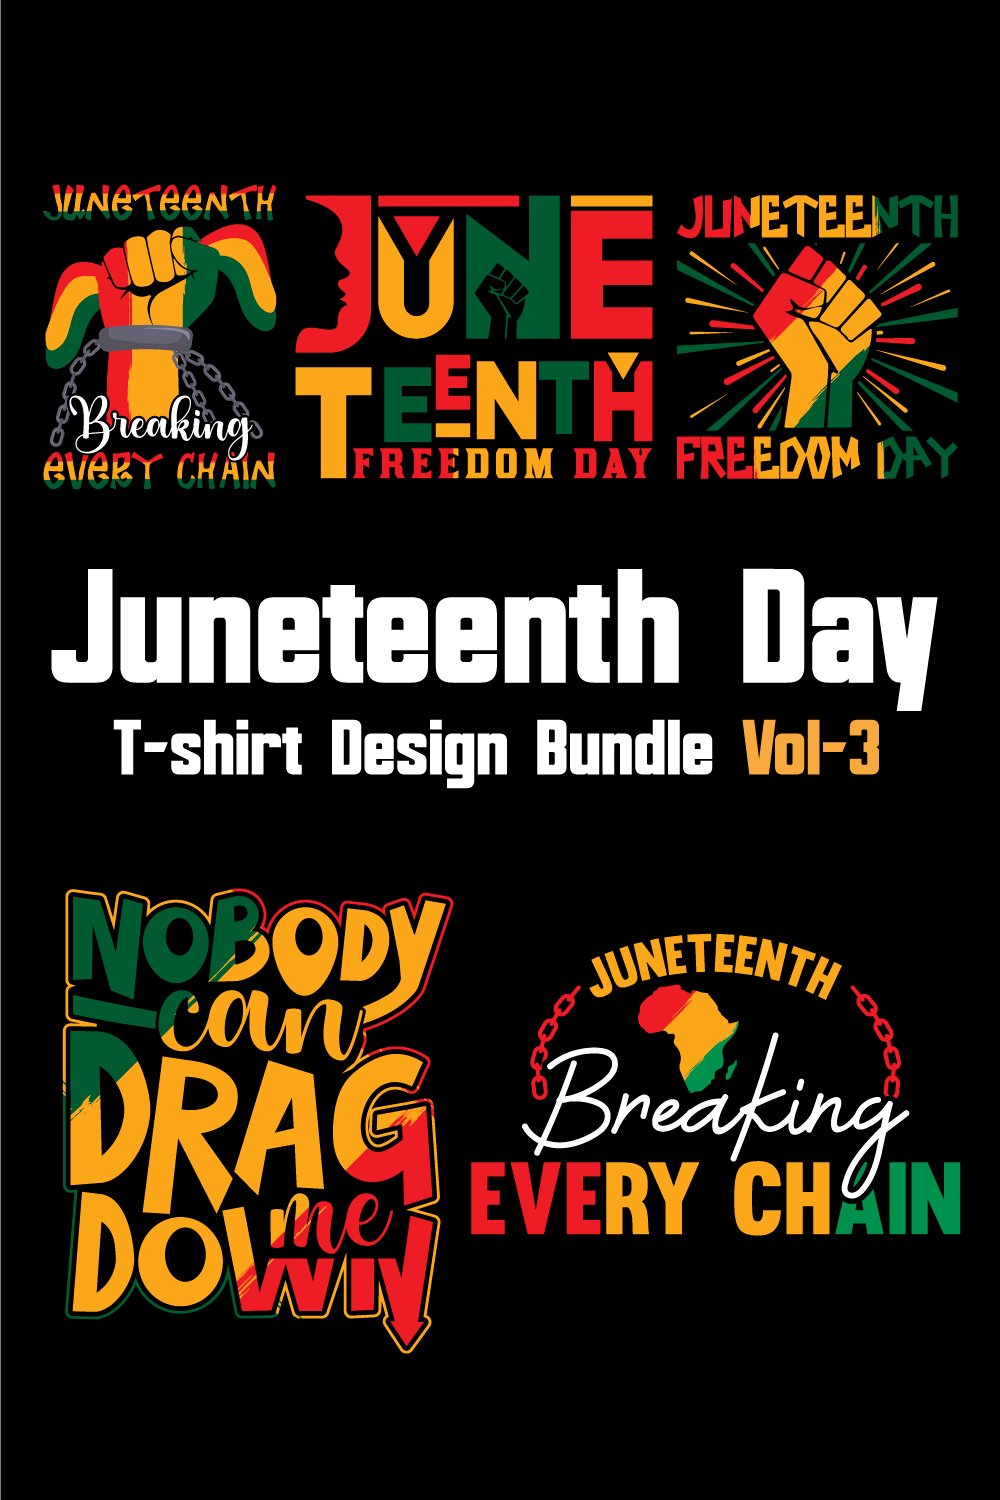 Juneteenth Day T-shirt Design Bundle Vol-3 pinterest preview image.